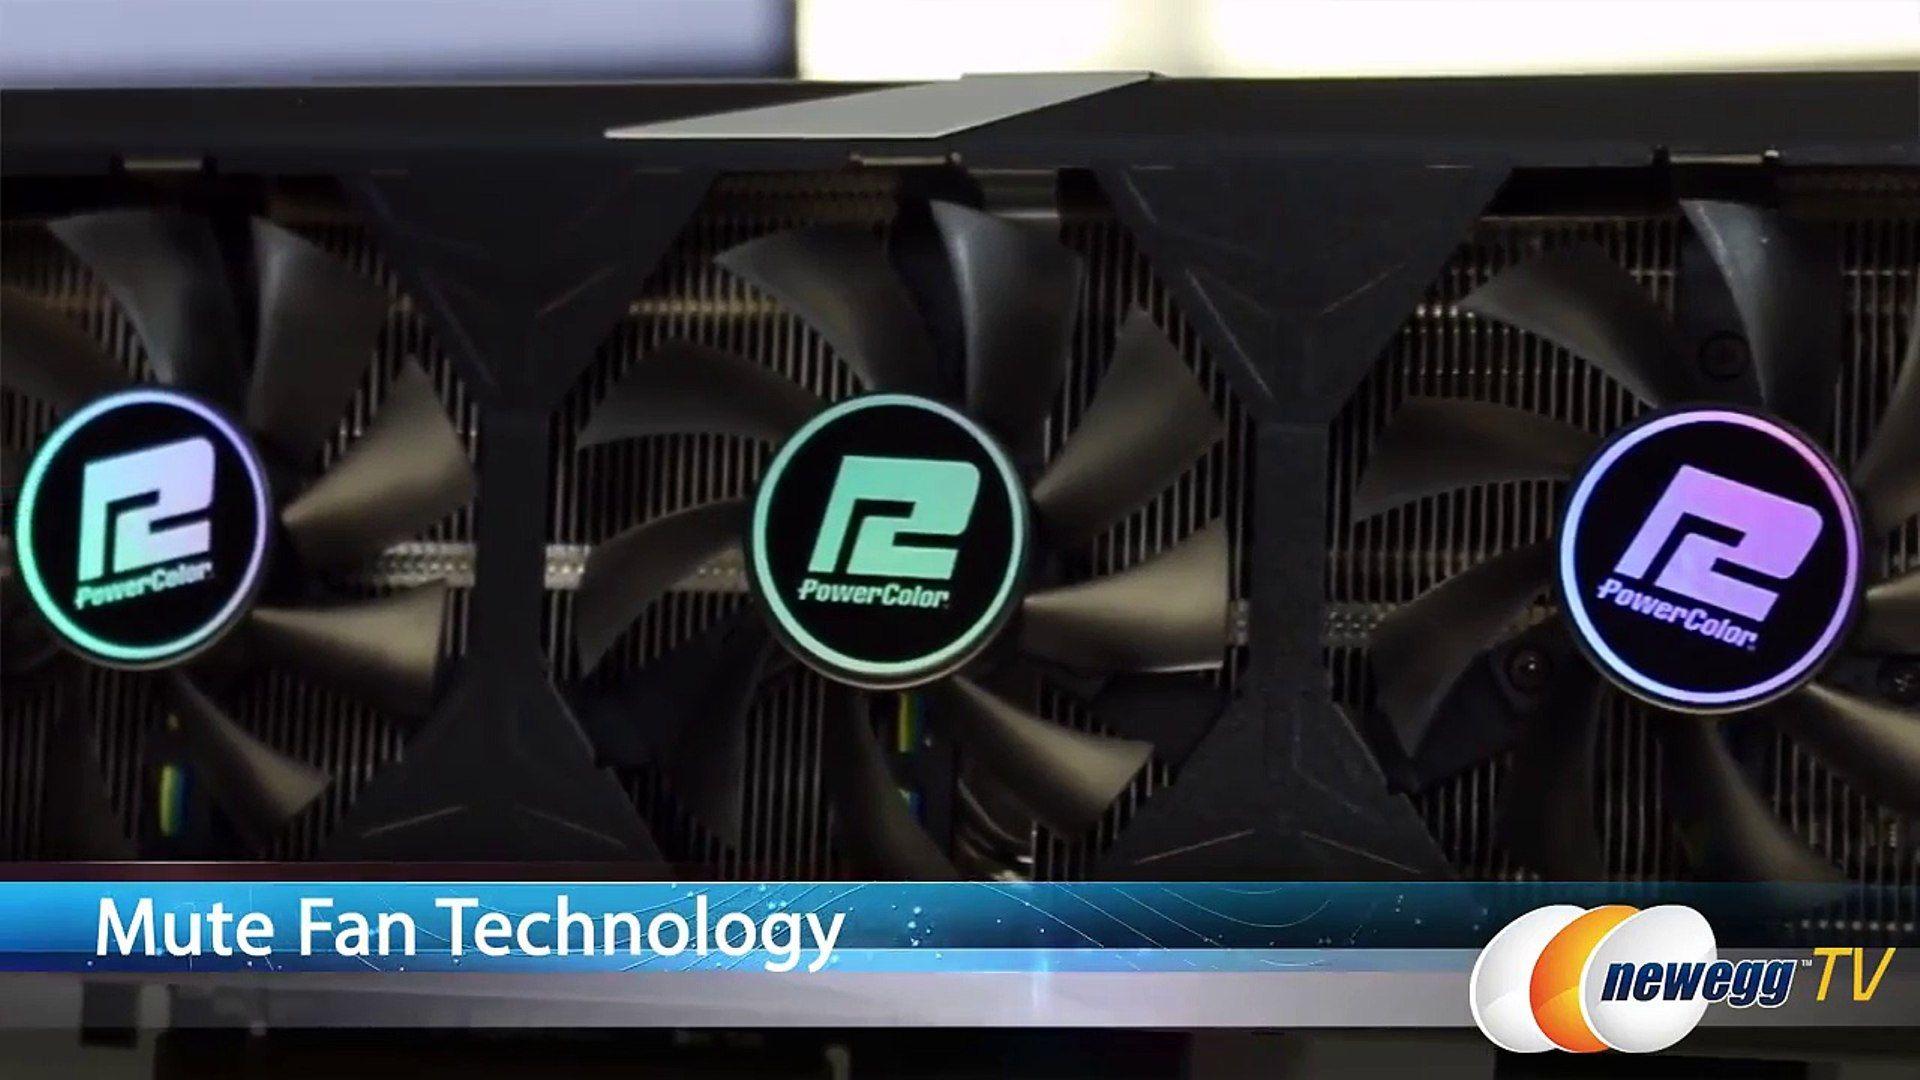 Newegg TV Logo - PowerColor Radeon R9 390 Graphics Card Overview - Newegg TV - video ...